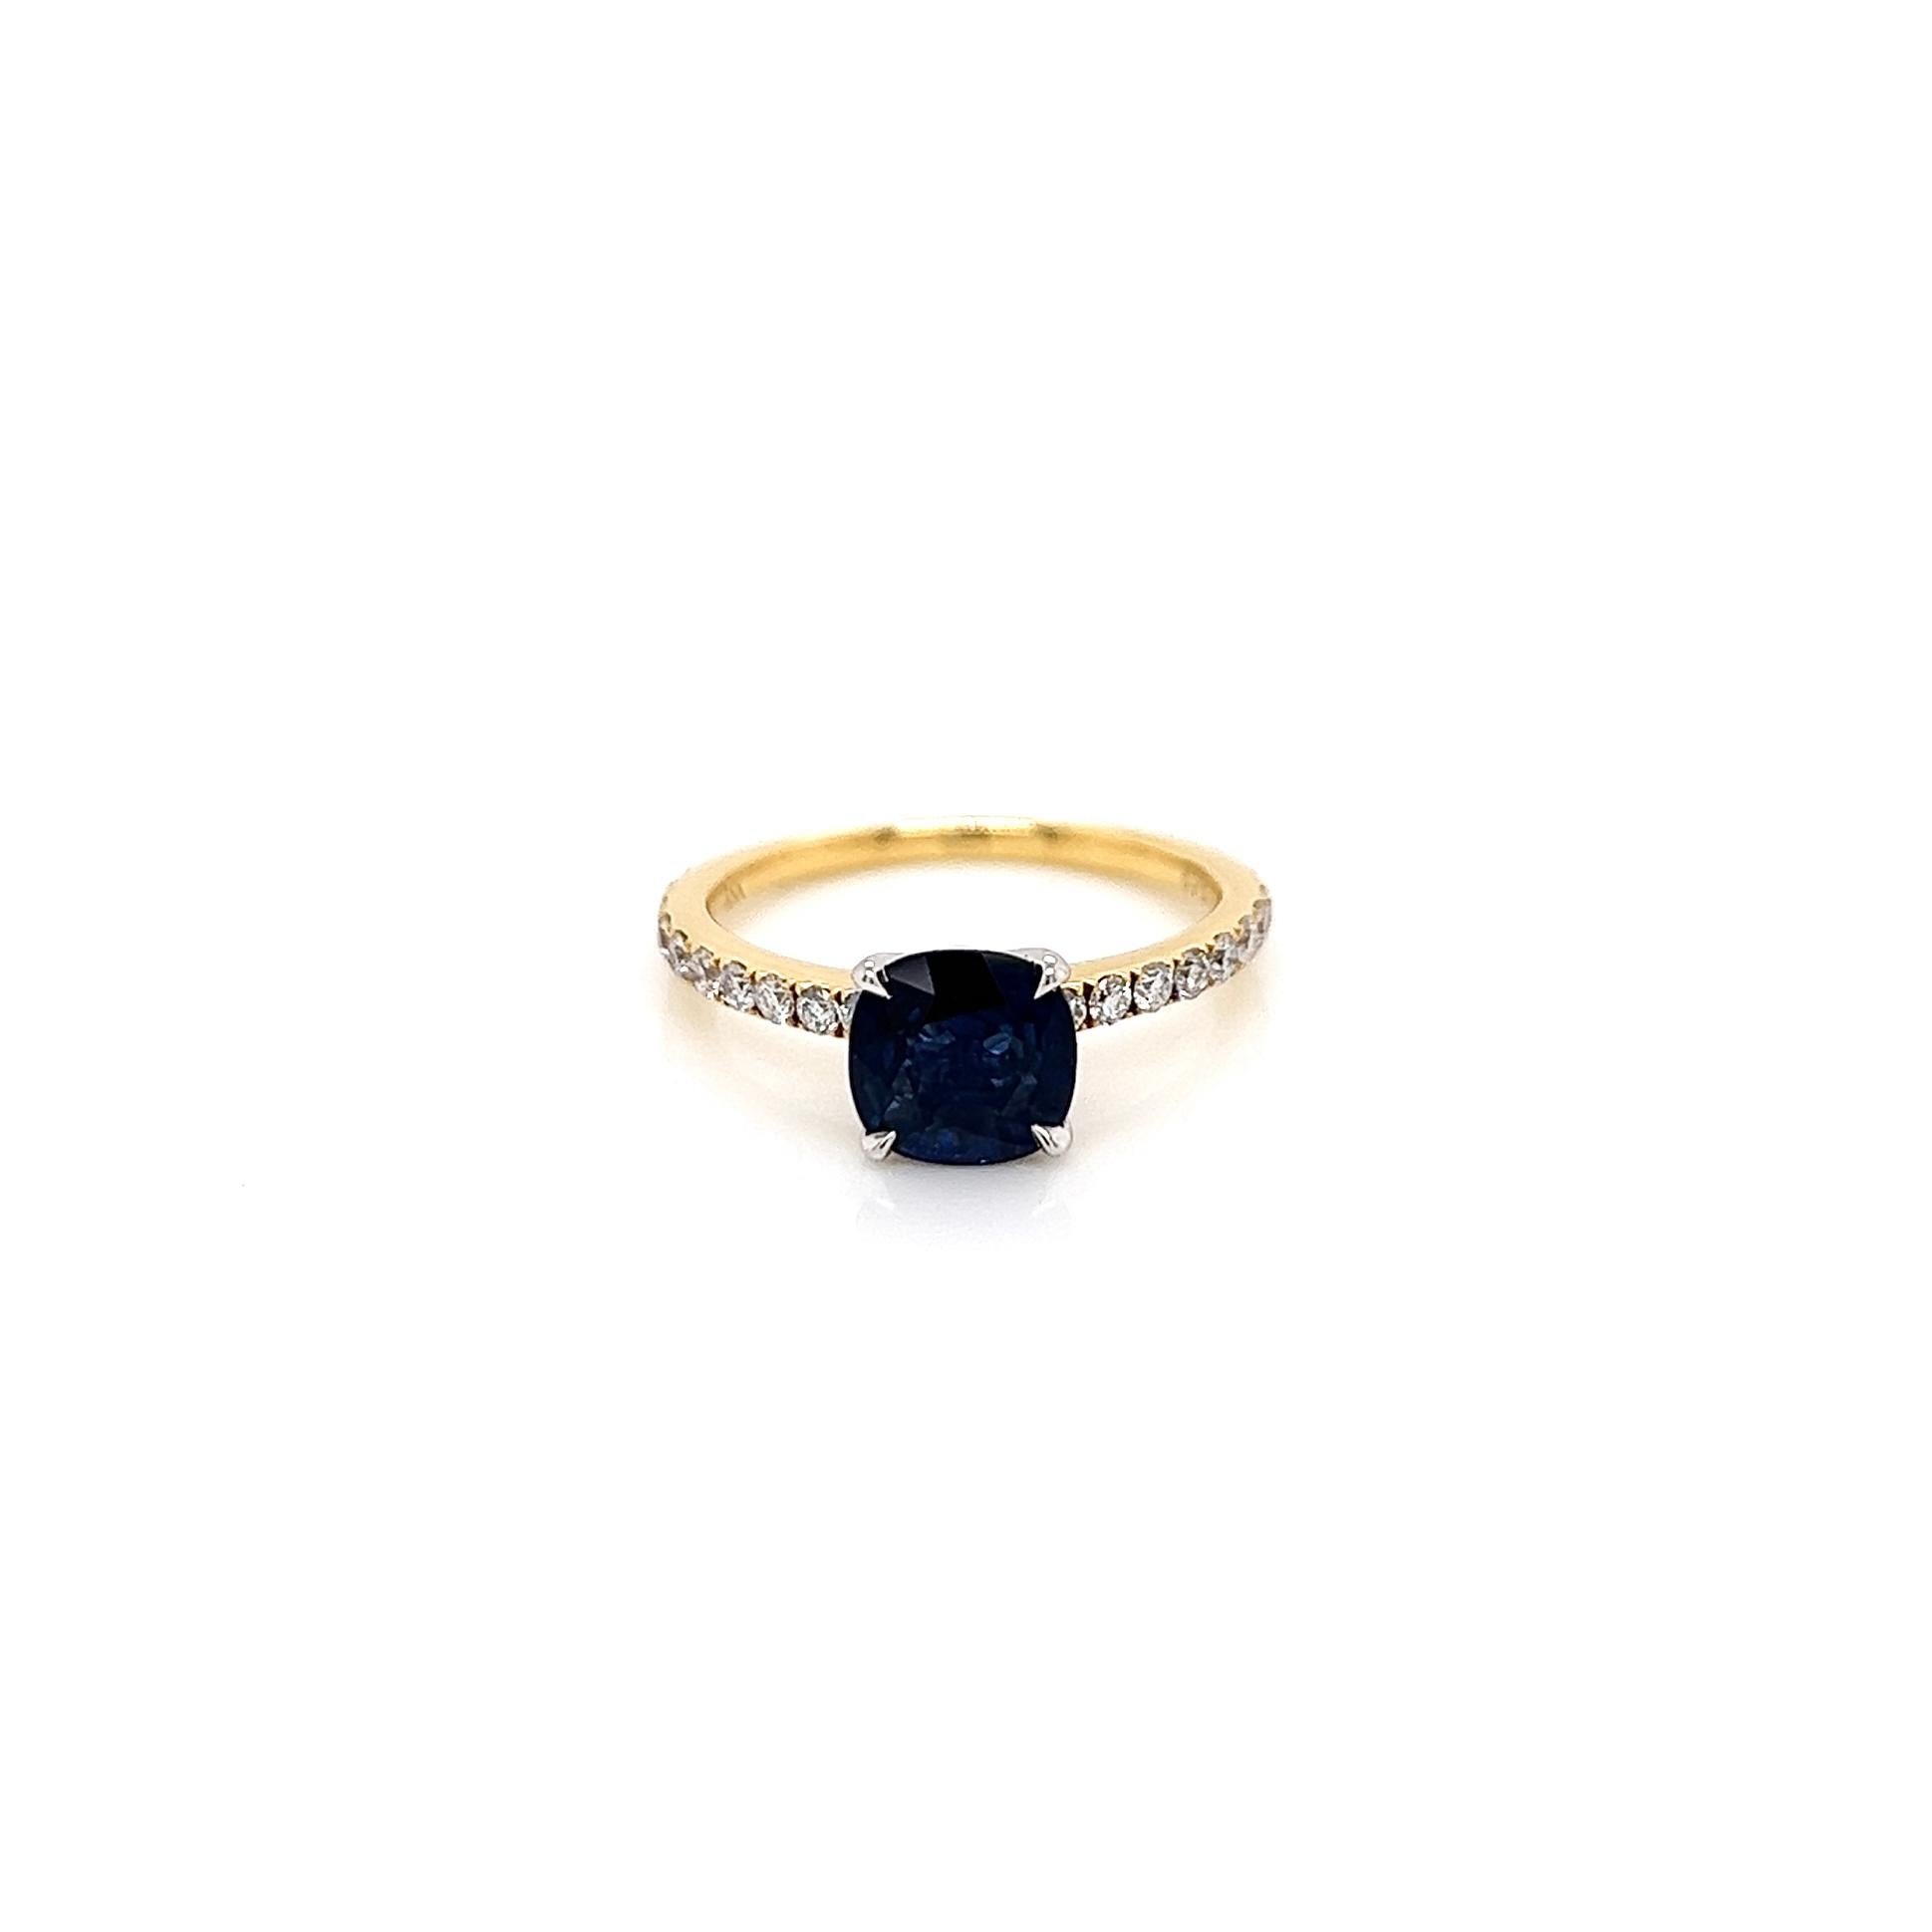 1.80Carat Sapphire Diamond Ladies Ring

-Metal Type: Platinum, 18K Yellow Gold
-1.38Carat Cushion Cut Blue Sapphire
-0.42Carat Round Side Natural Diamonds
-Size 5.5

Made in New York City